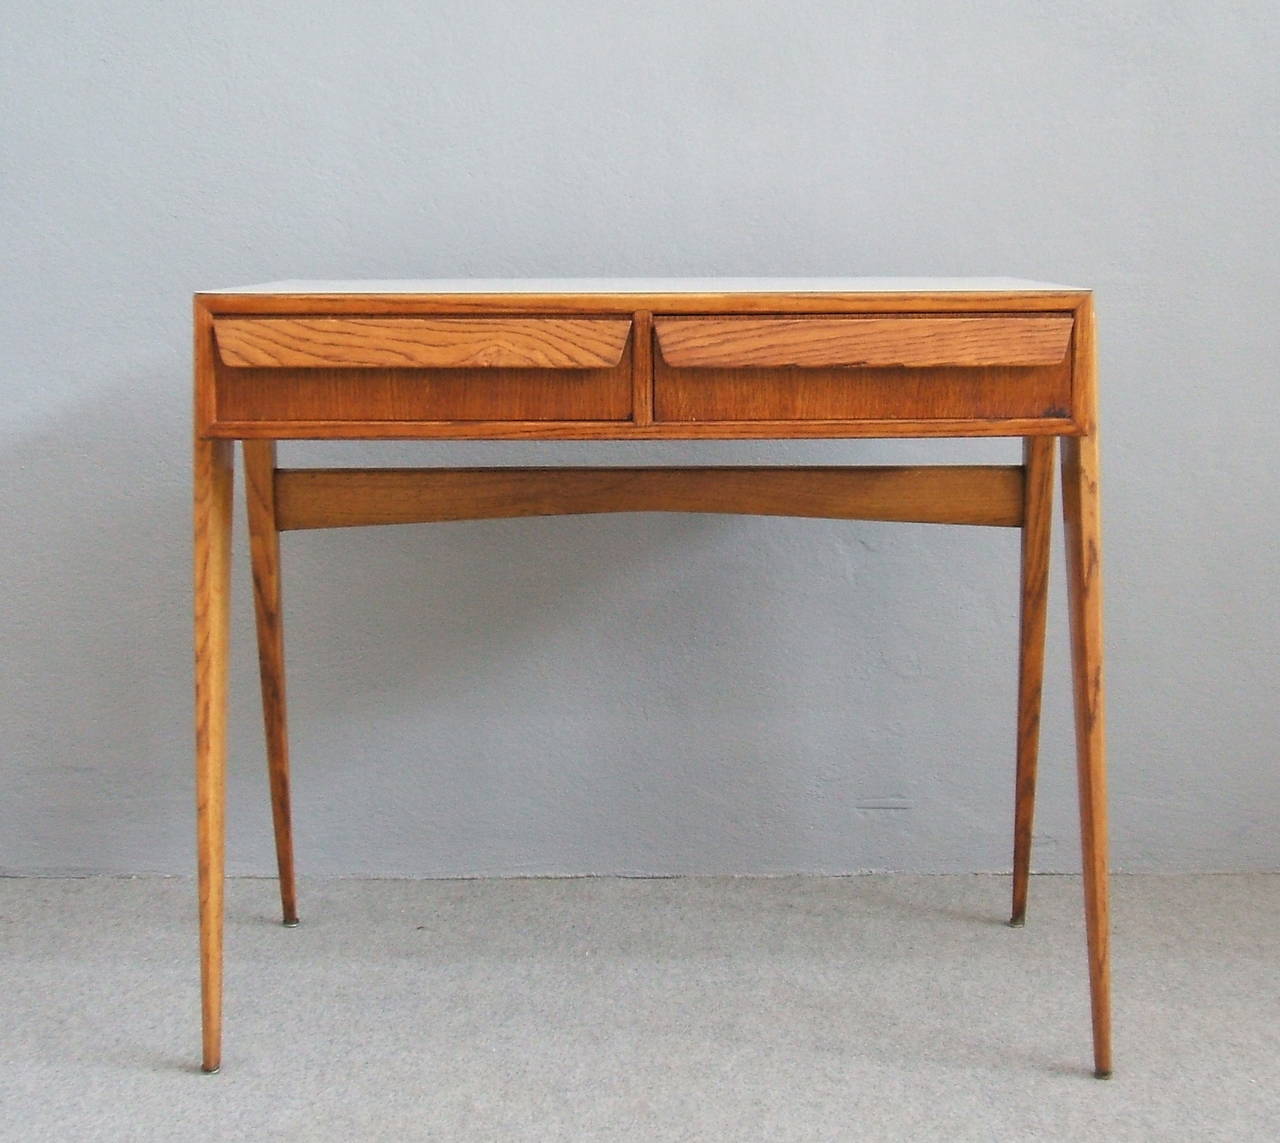 Elegant shape for this writing desk in the style of Carlo de Carli.
Label Barovero Torino.